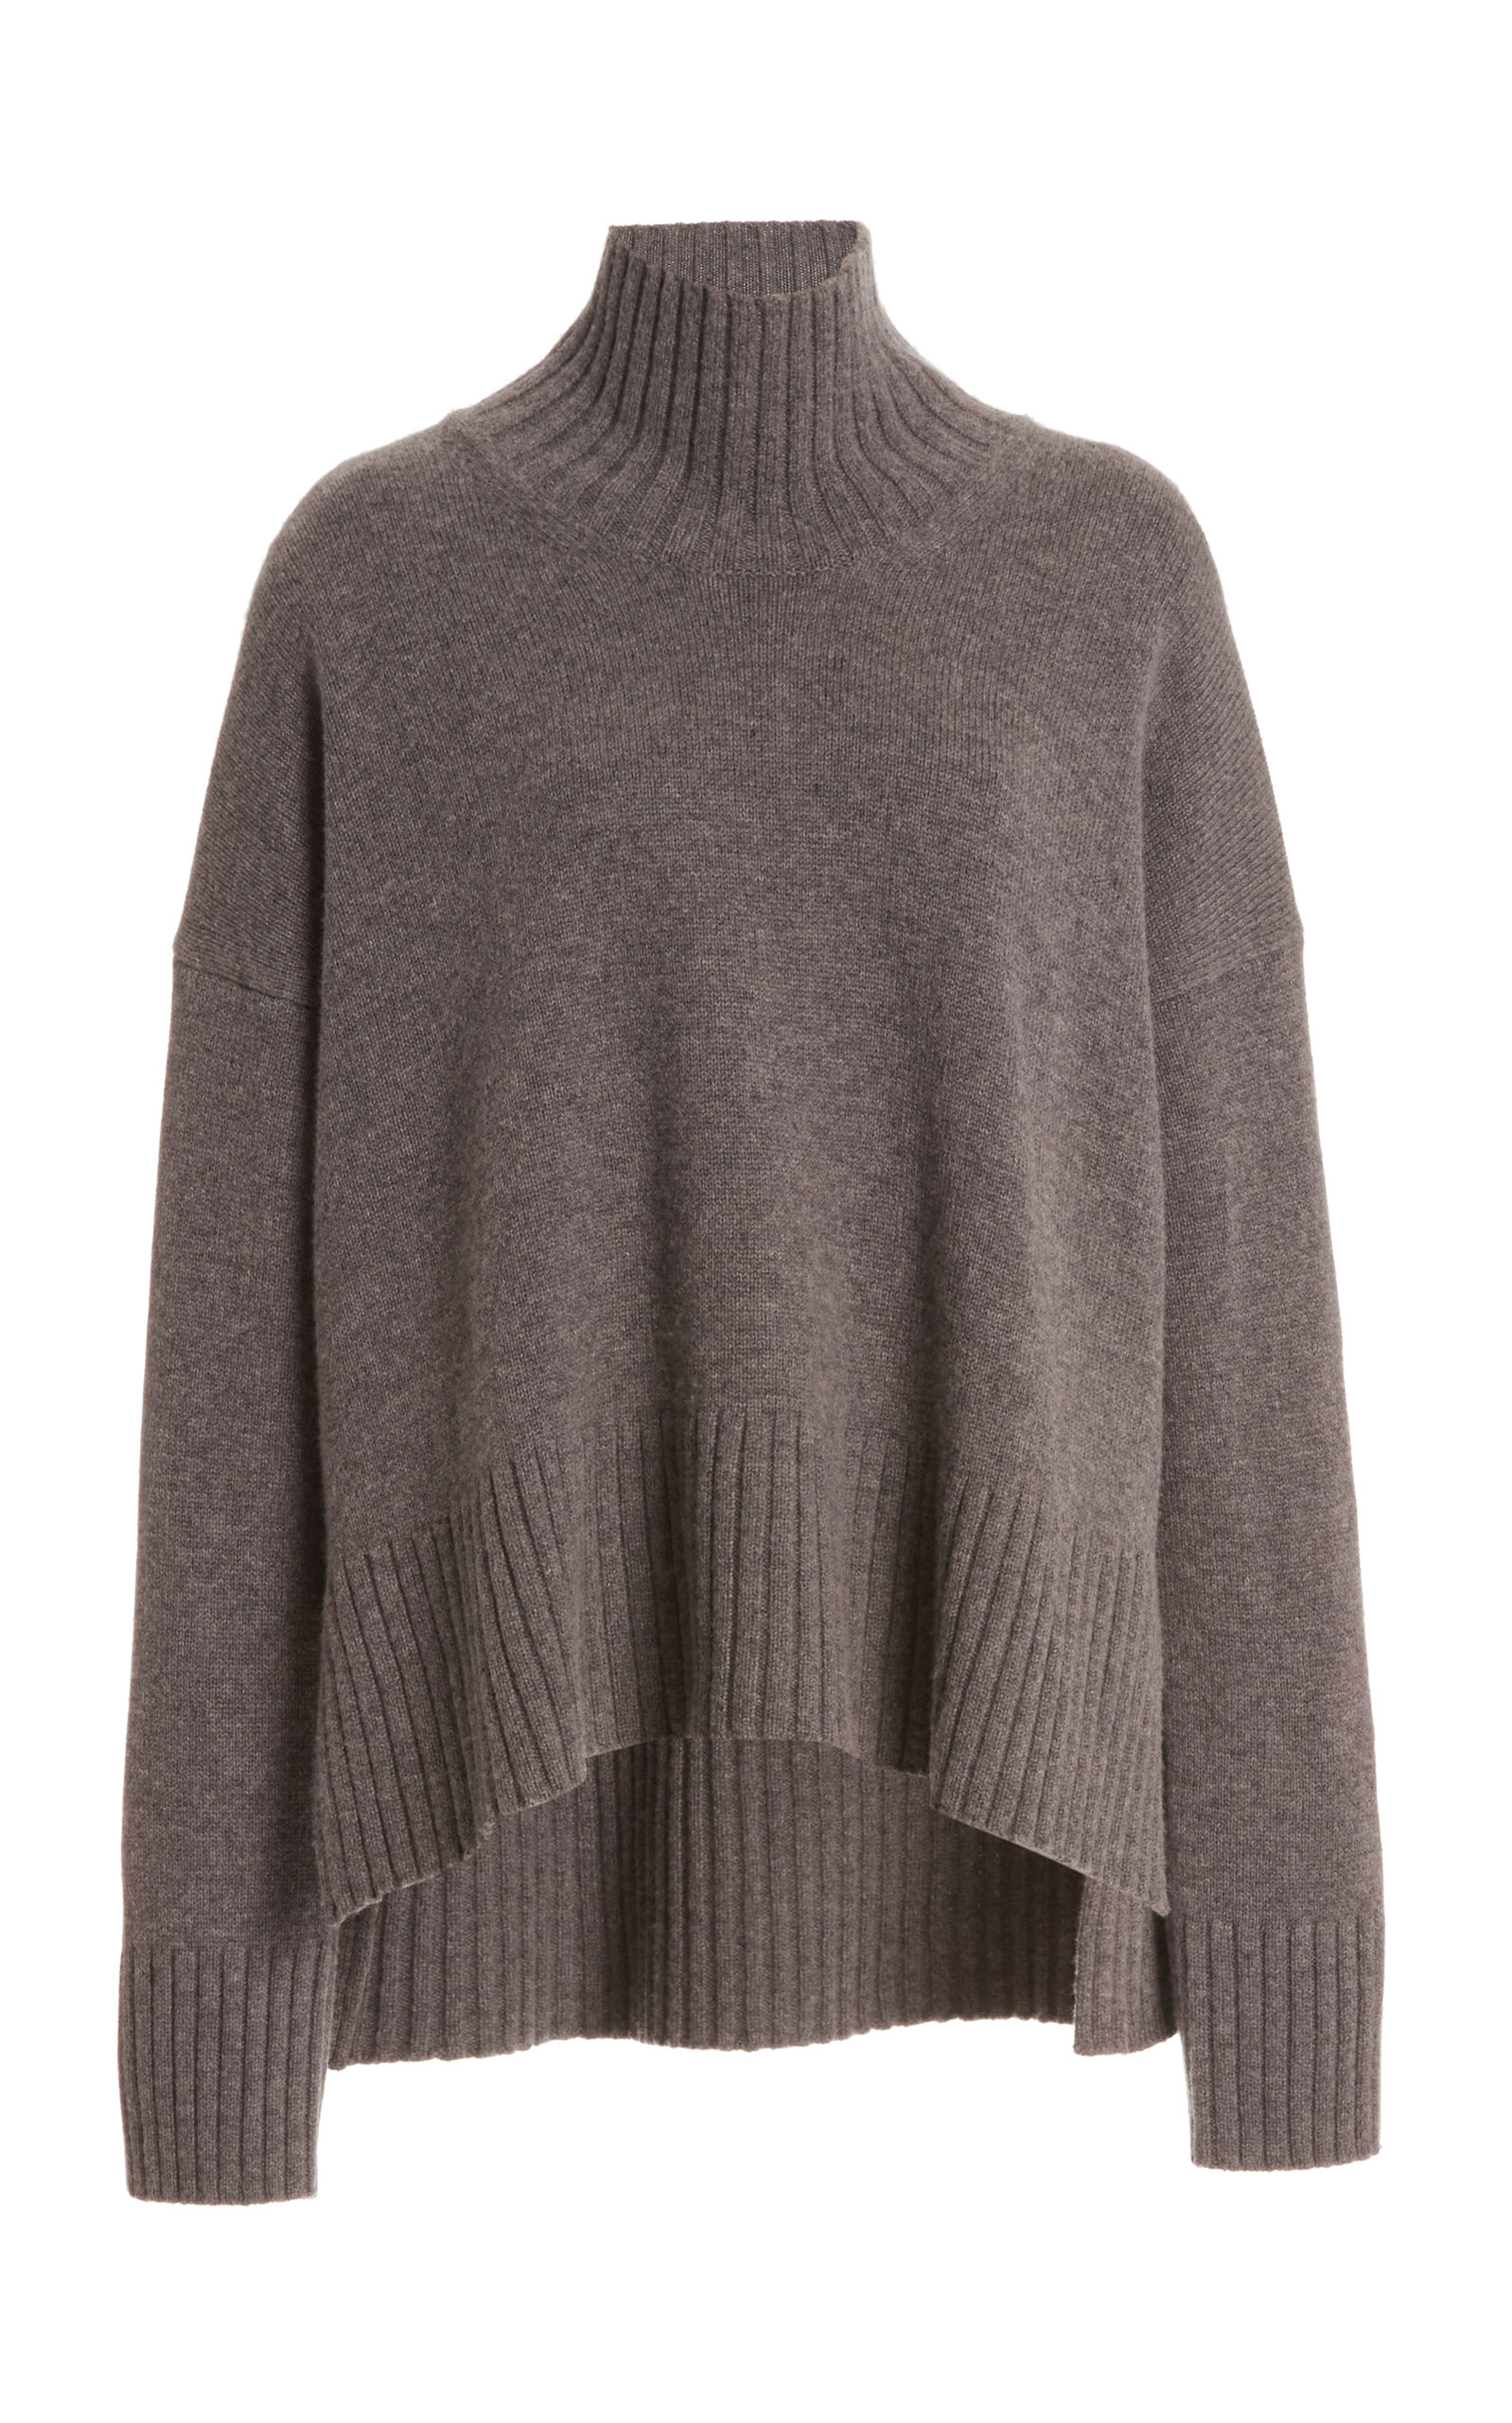 CoCo - Women's Wool-Cashmere Turtleneck Sweater - Brown/neutral - Moda ...